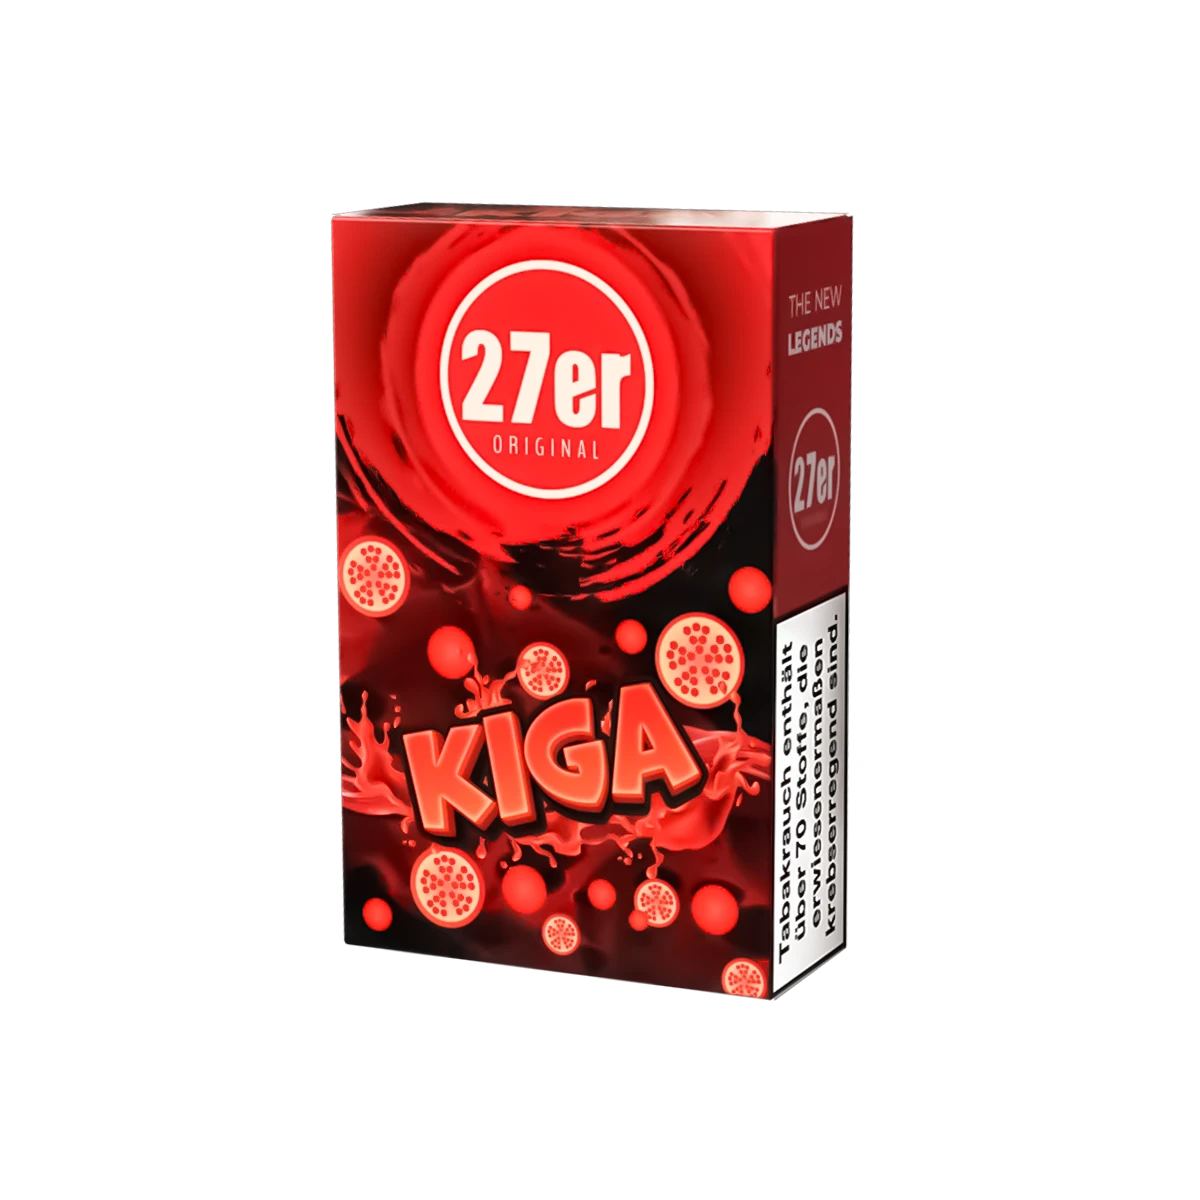 27er Tobacco Shisha Tabak Kiga 25 g | Online bestellen 2